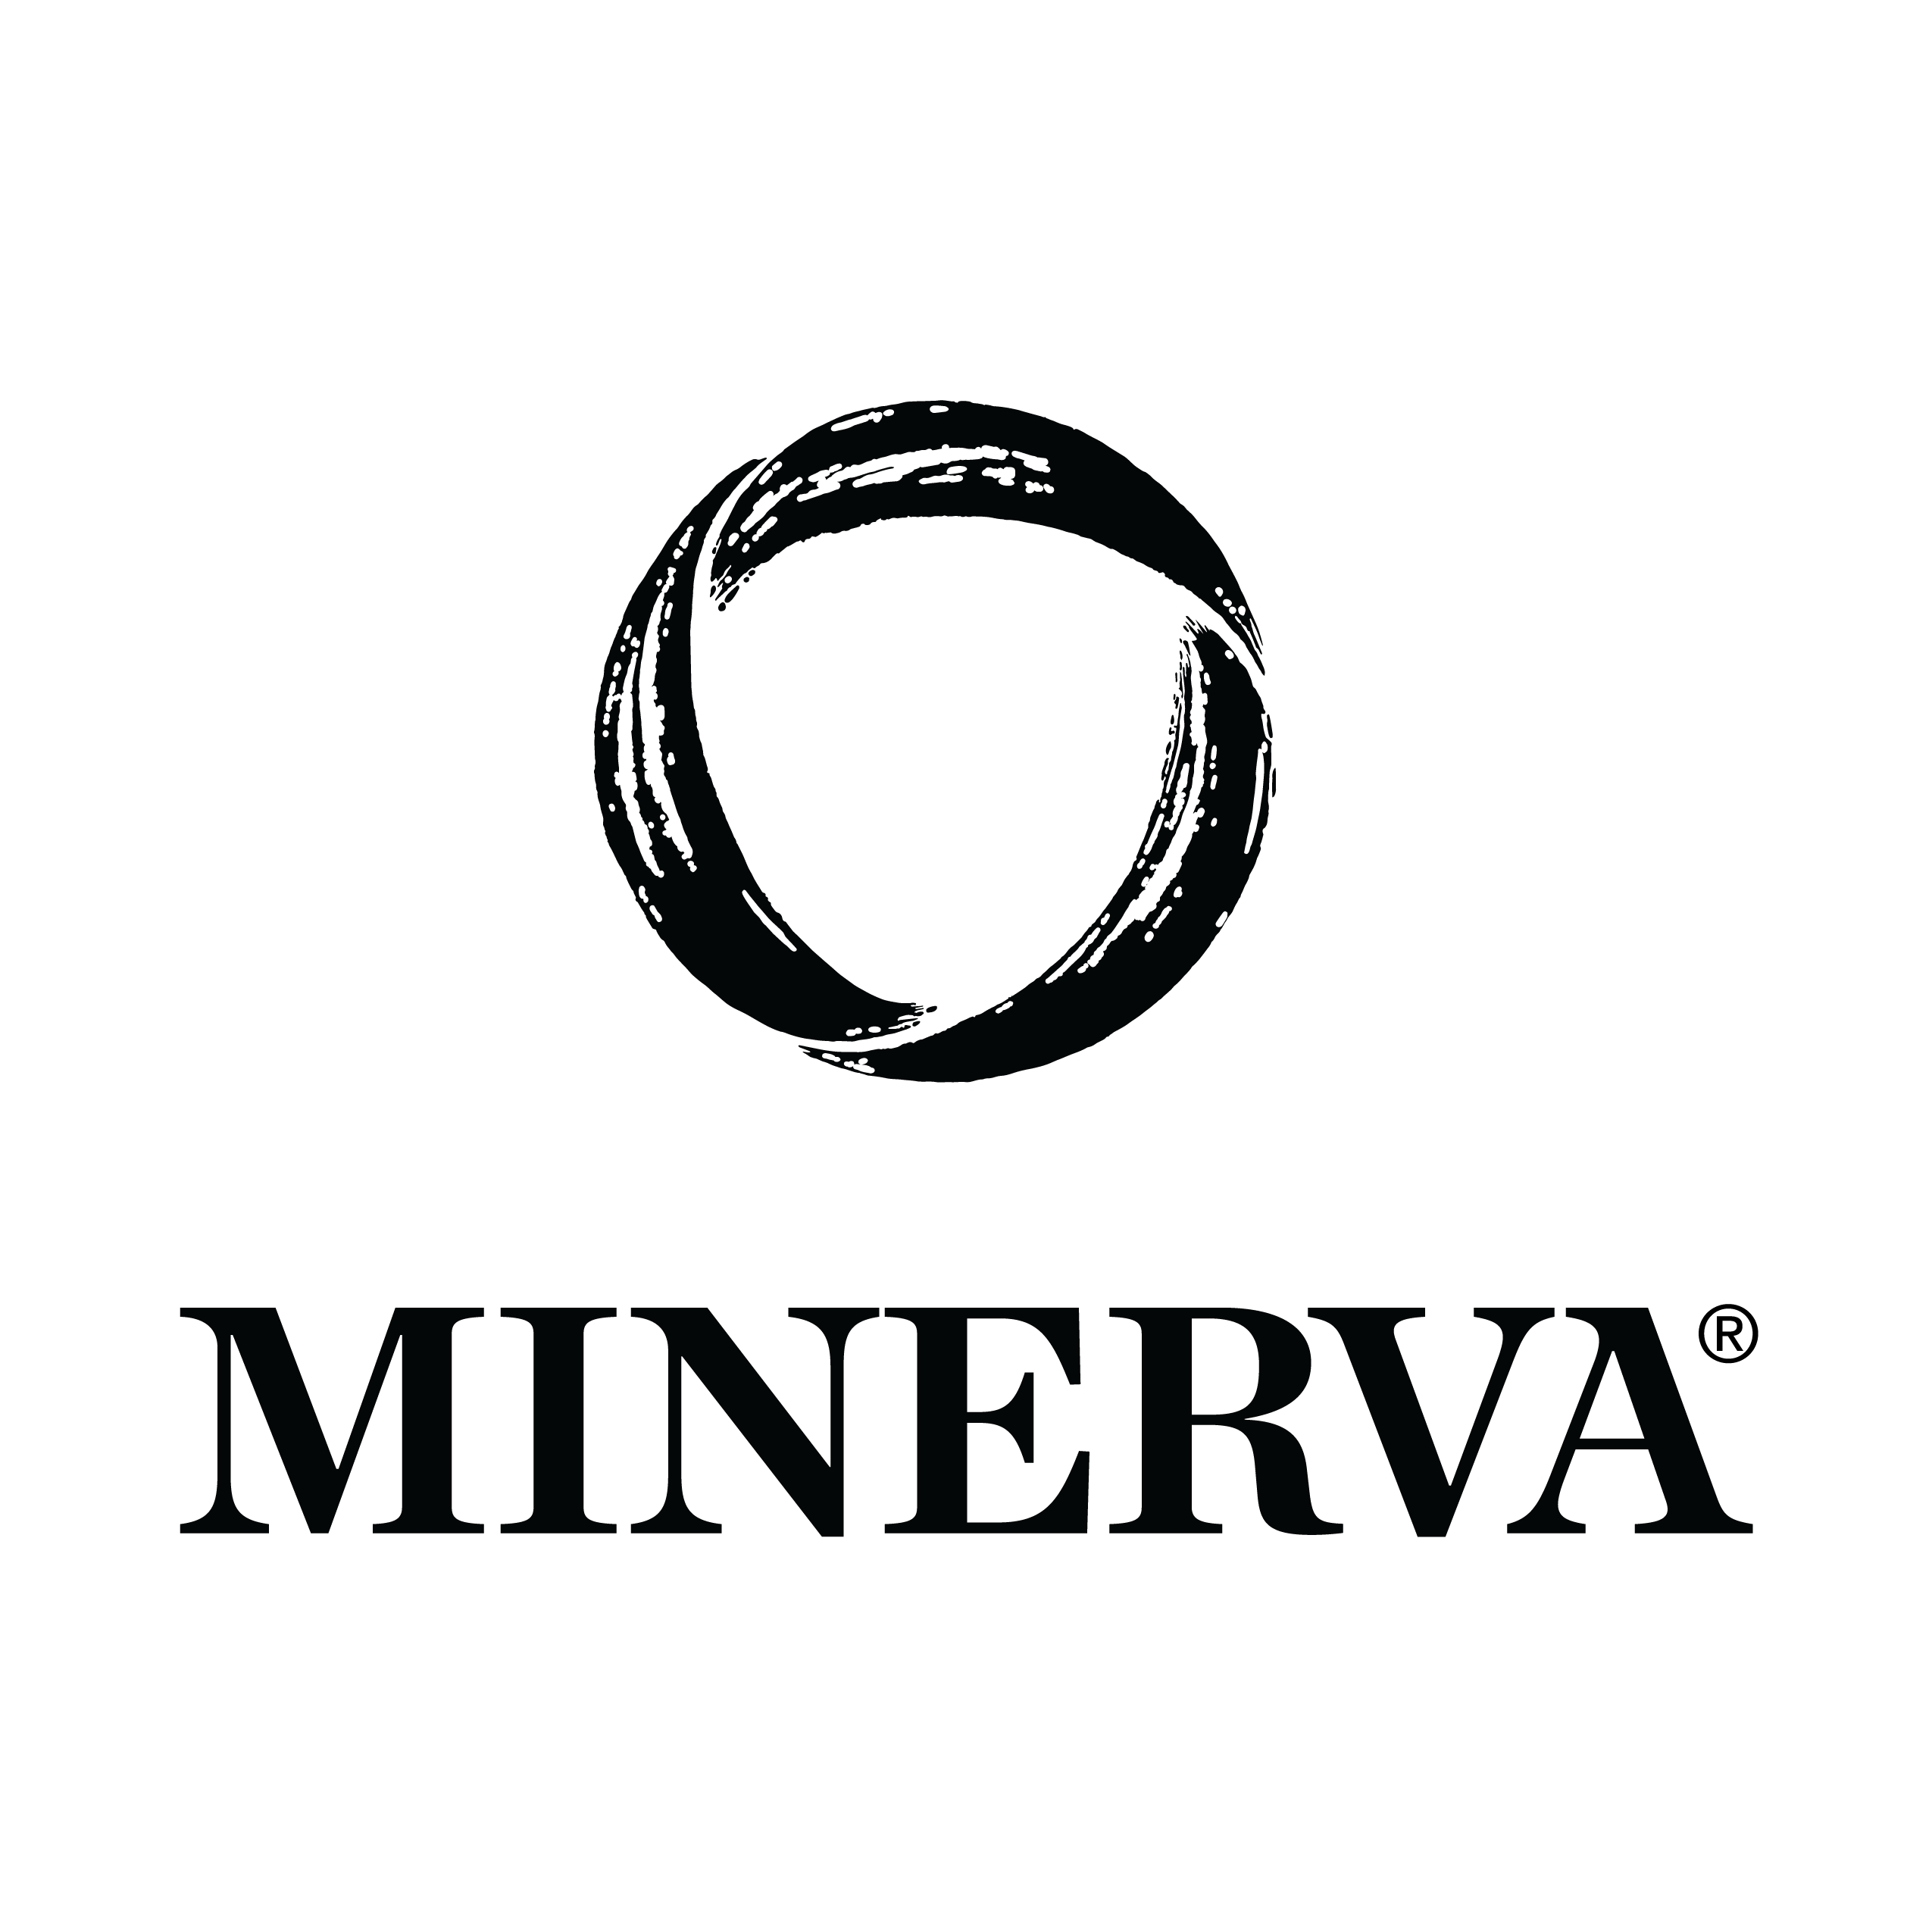 Minerva Project logo